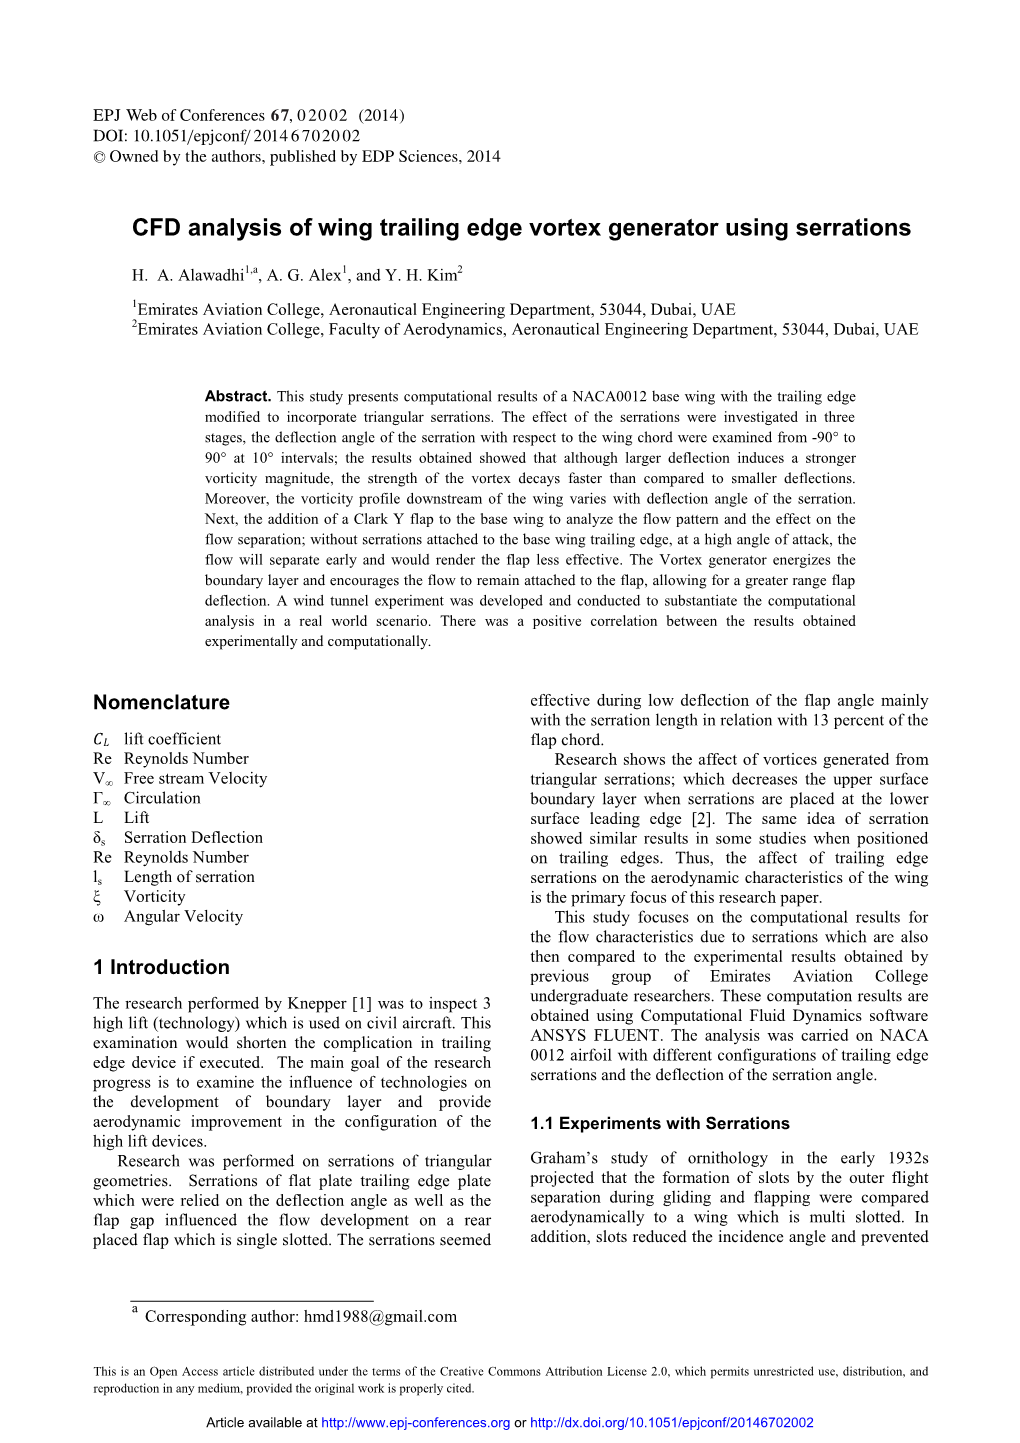 CFD Analysis of Wing Trailing Edge Vortex Generator Using Serrations